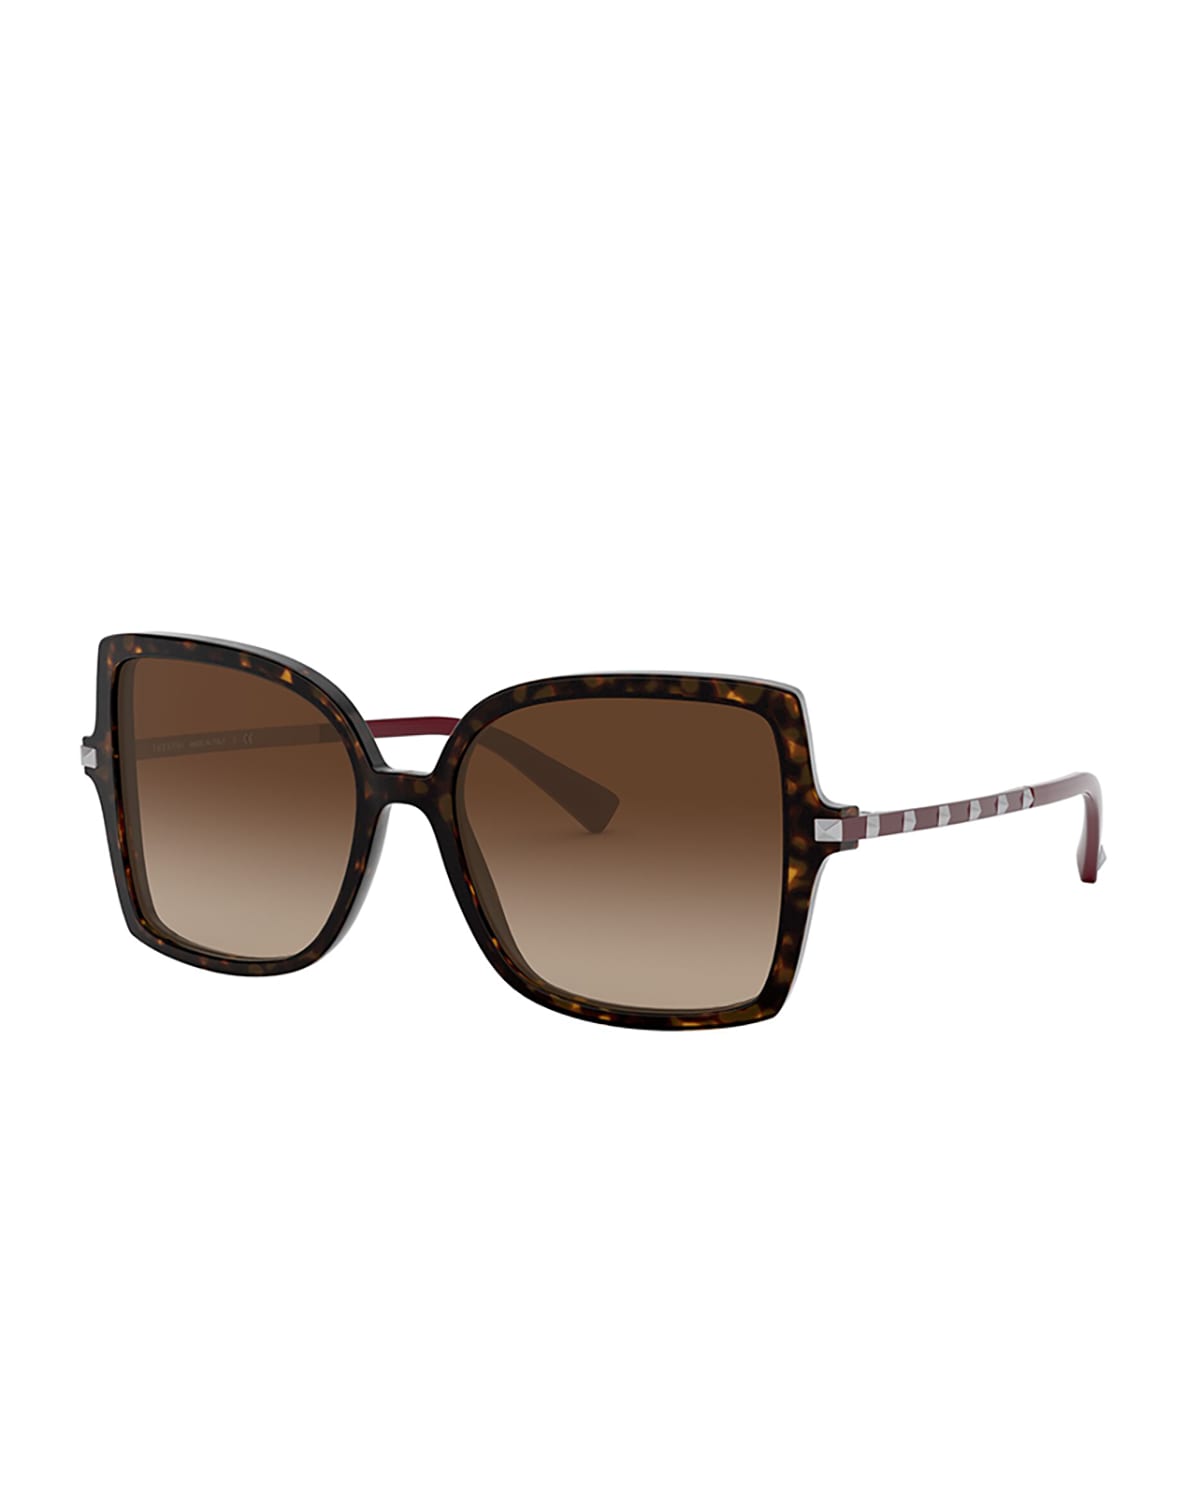 Valentino Square Acetate Sunglasses w/ Rockstud Arms